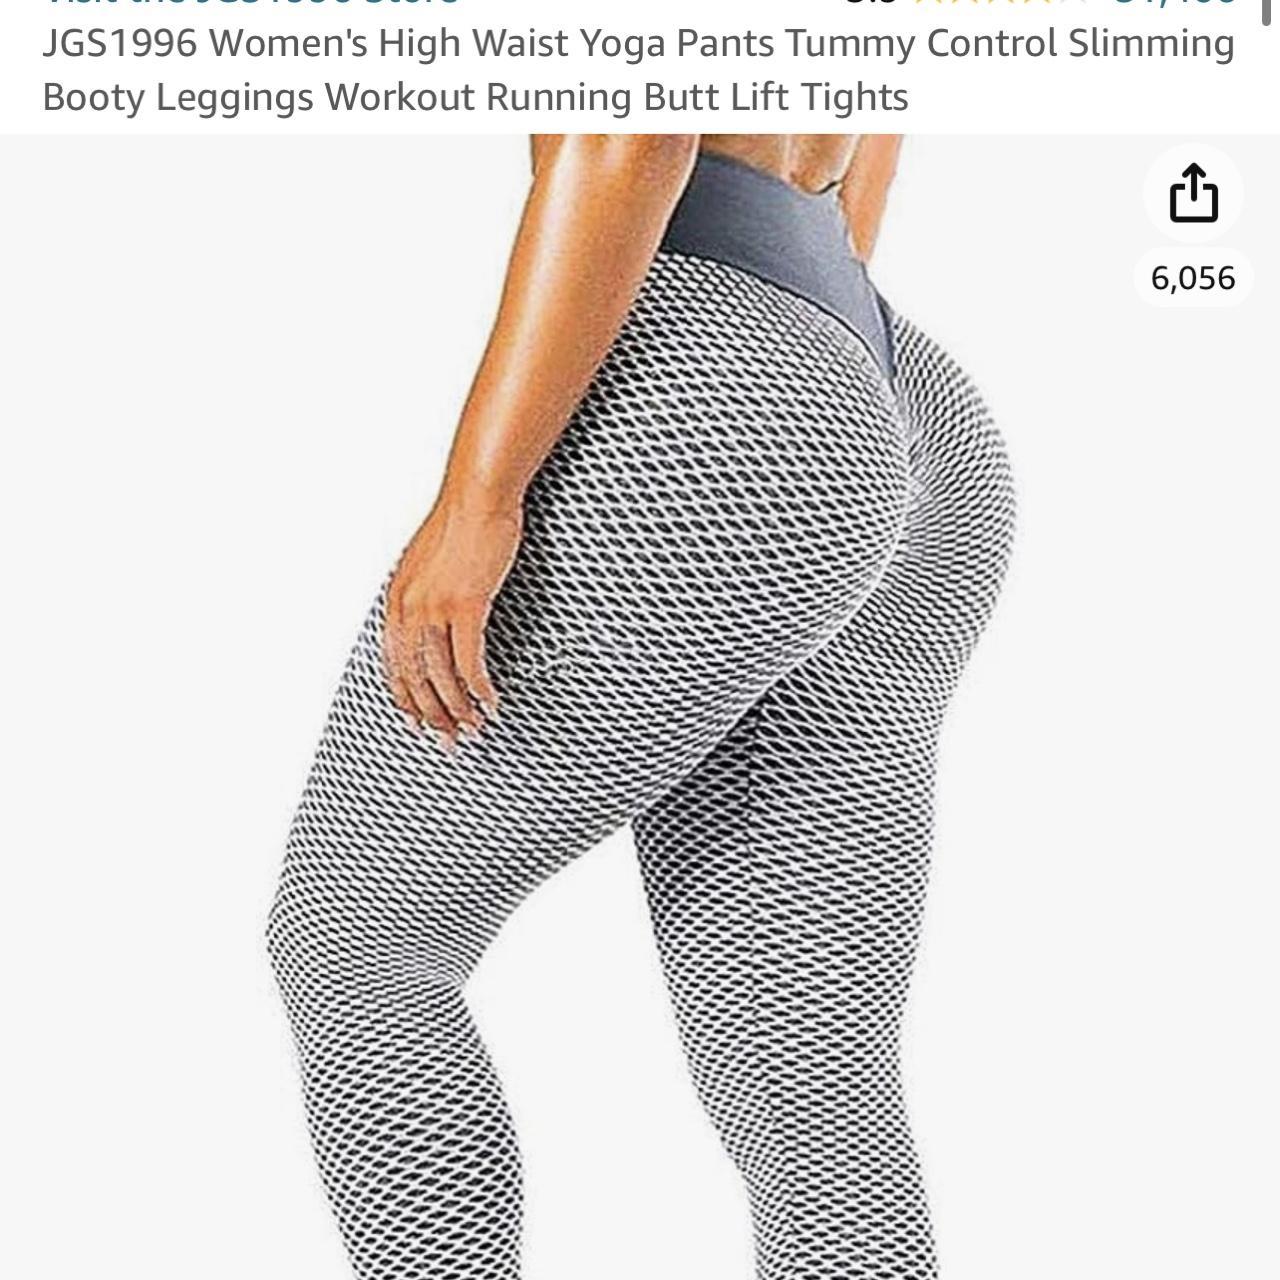 JGS1996 Women's High Waist Yoga Pants Tummy Control Slimming Booty